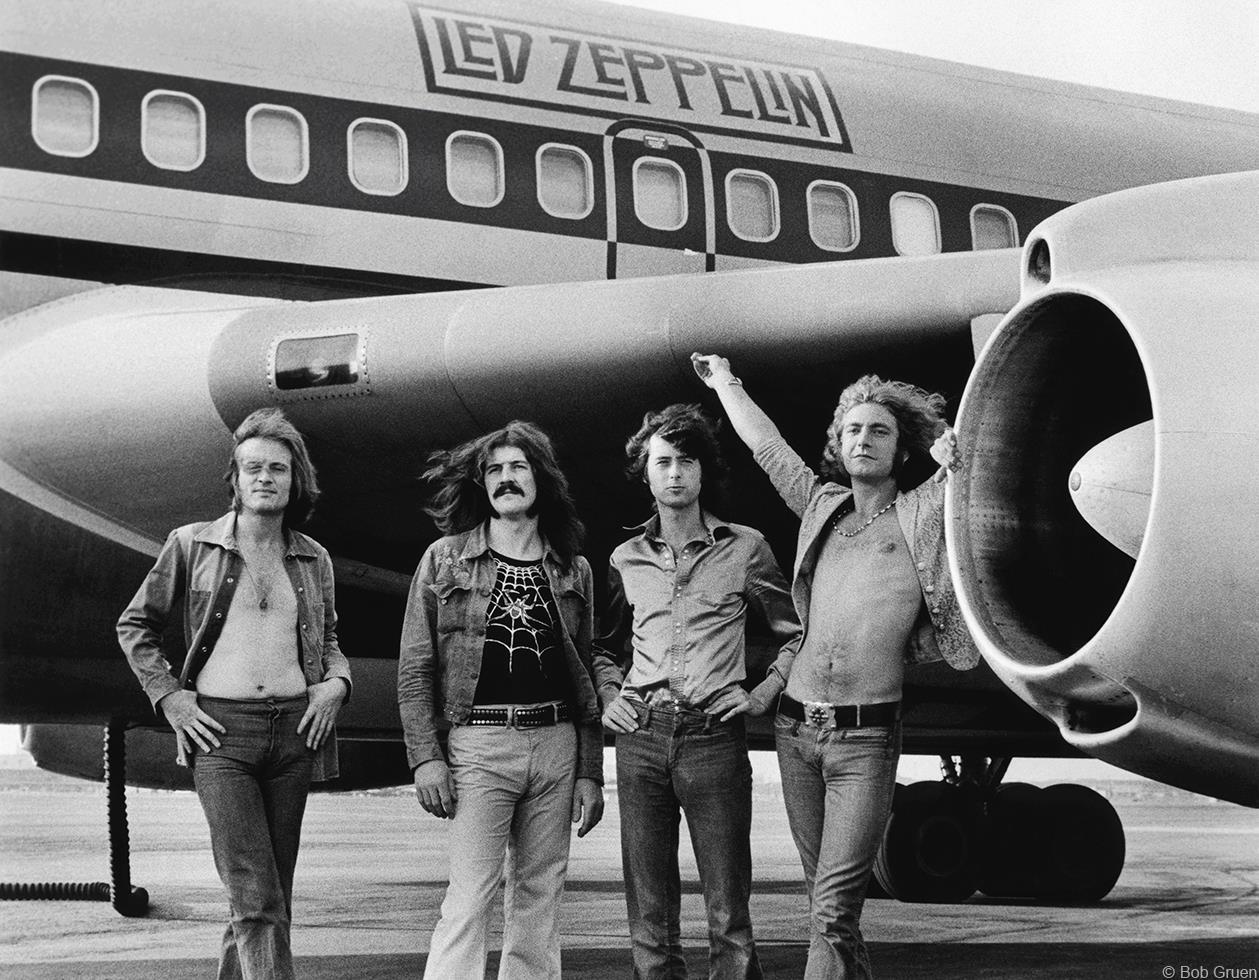 Bob Gruen Black and White Photograph - Led Zeppelin "Plane"